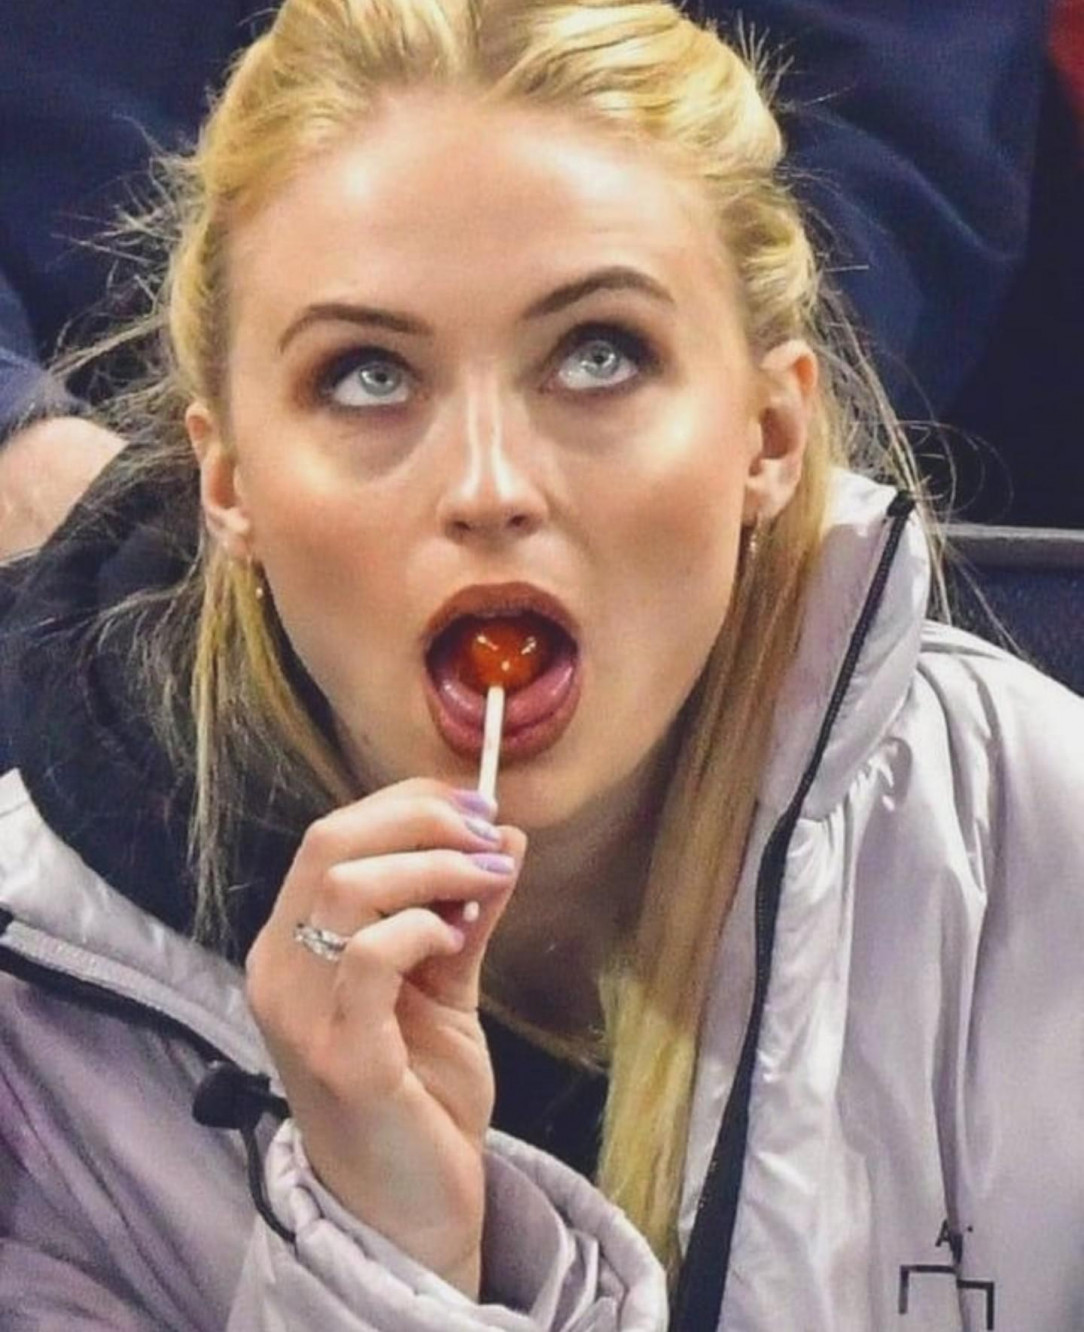 Lollipop time